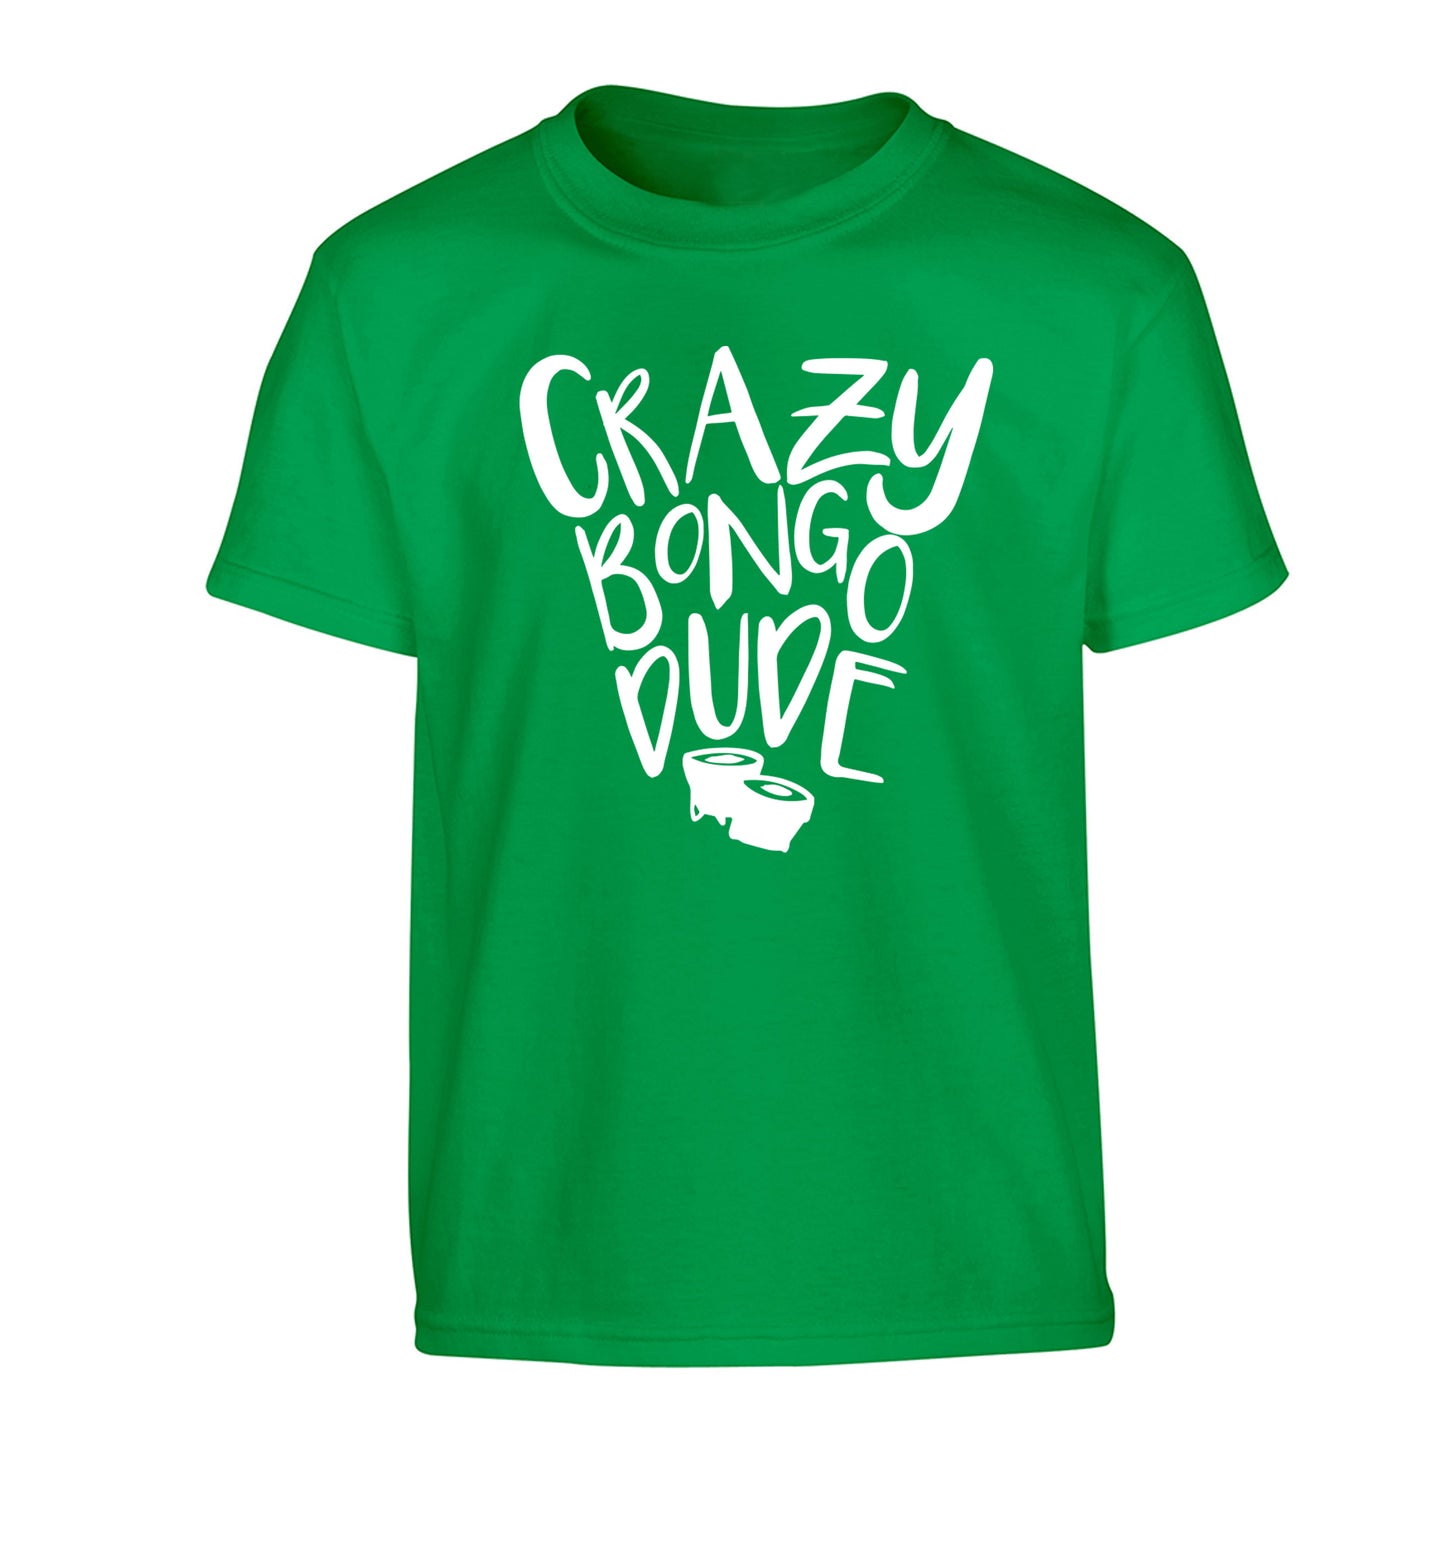 Crazy bongo dude Children's green Tshirt 12-14 Years